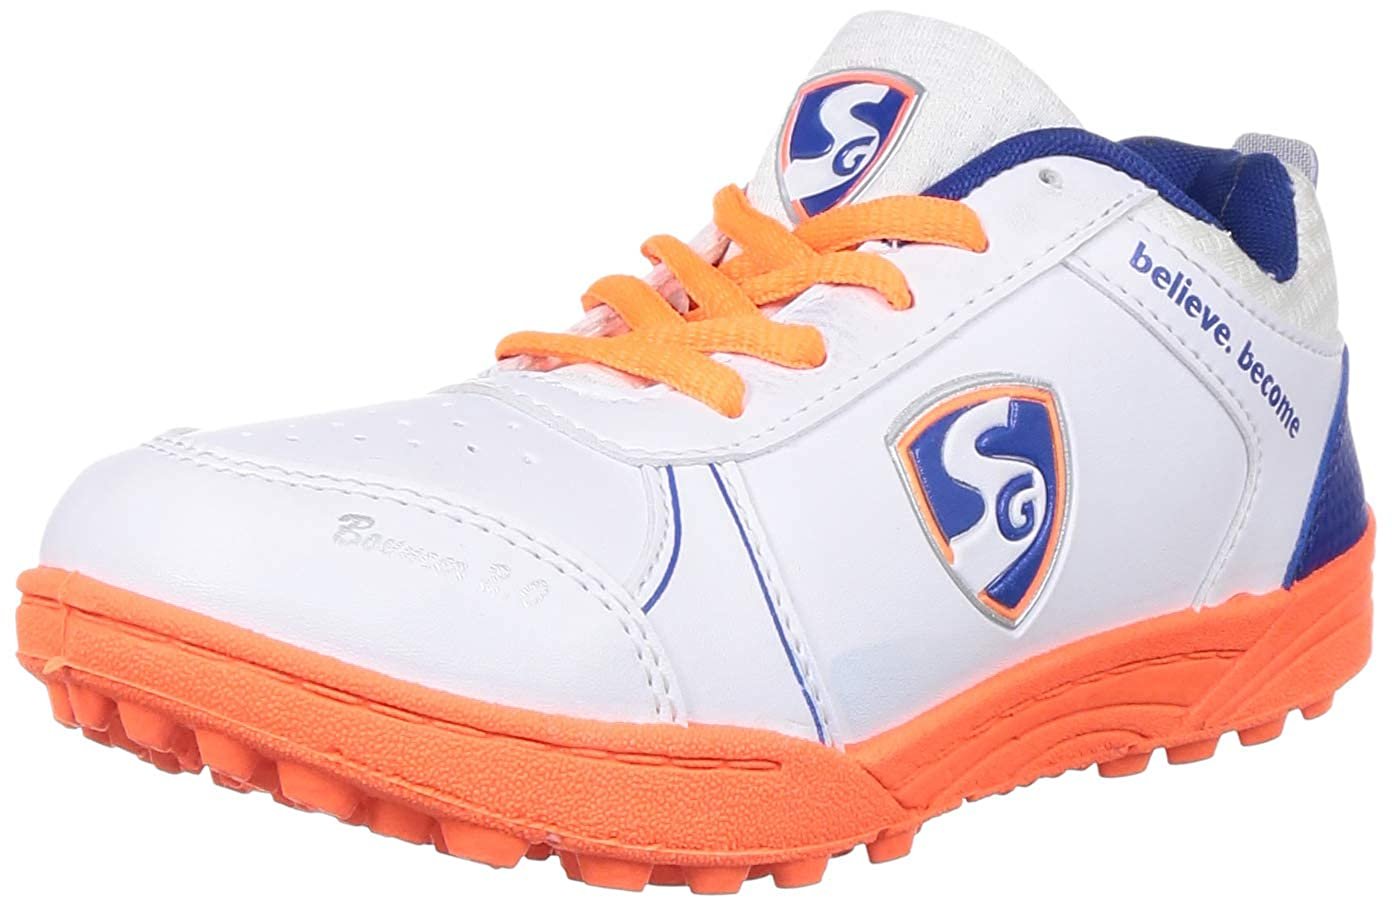 SG Cricket Shoe